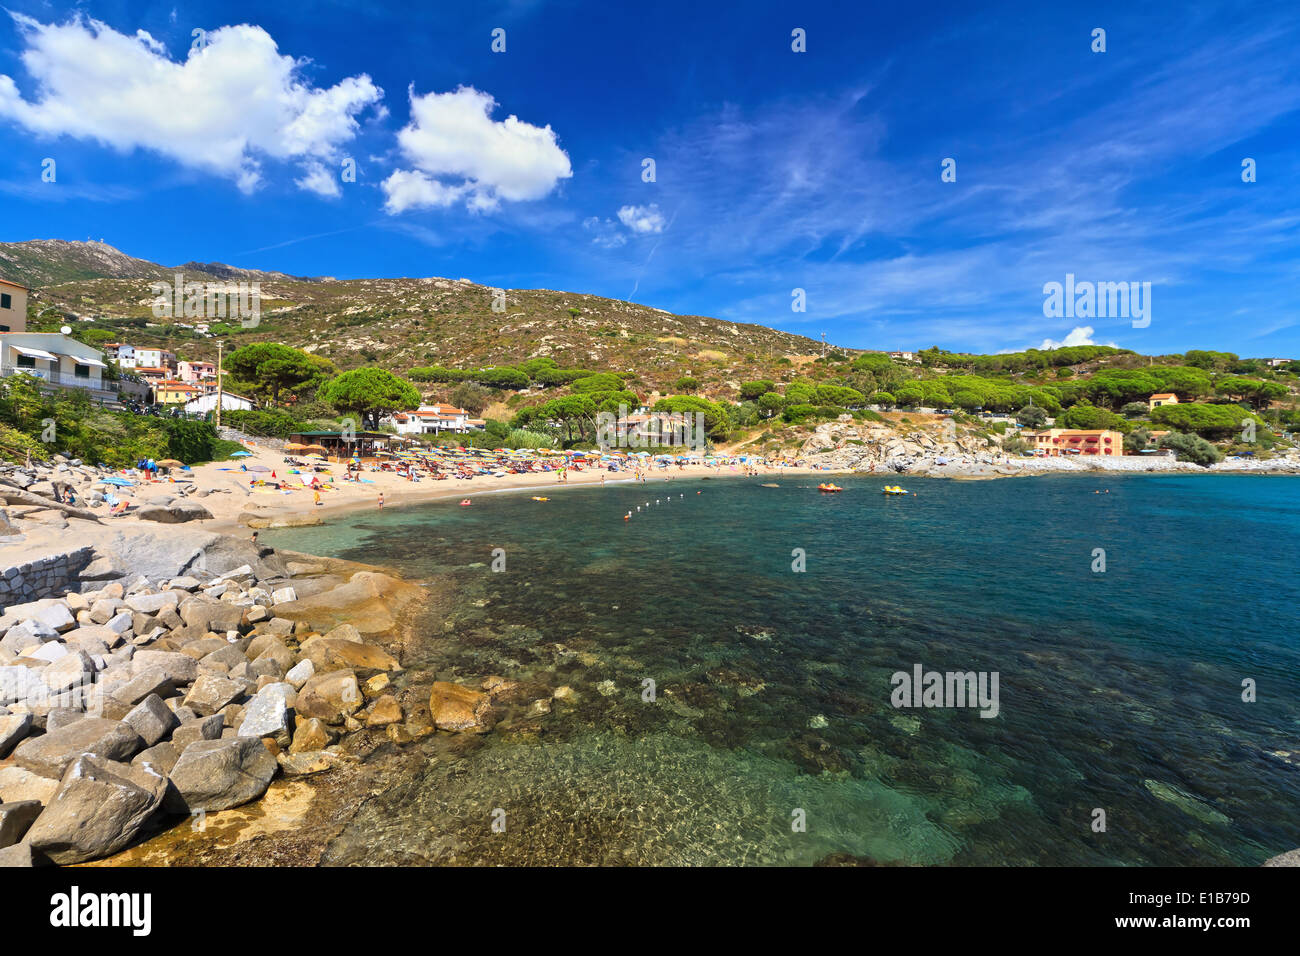 summer view of Seccheto seaside, Elba island, Italy Stock Photo